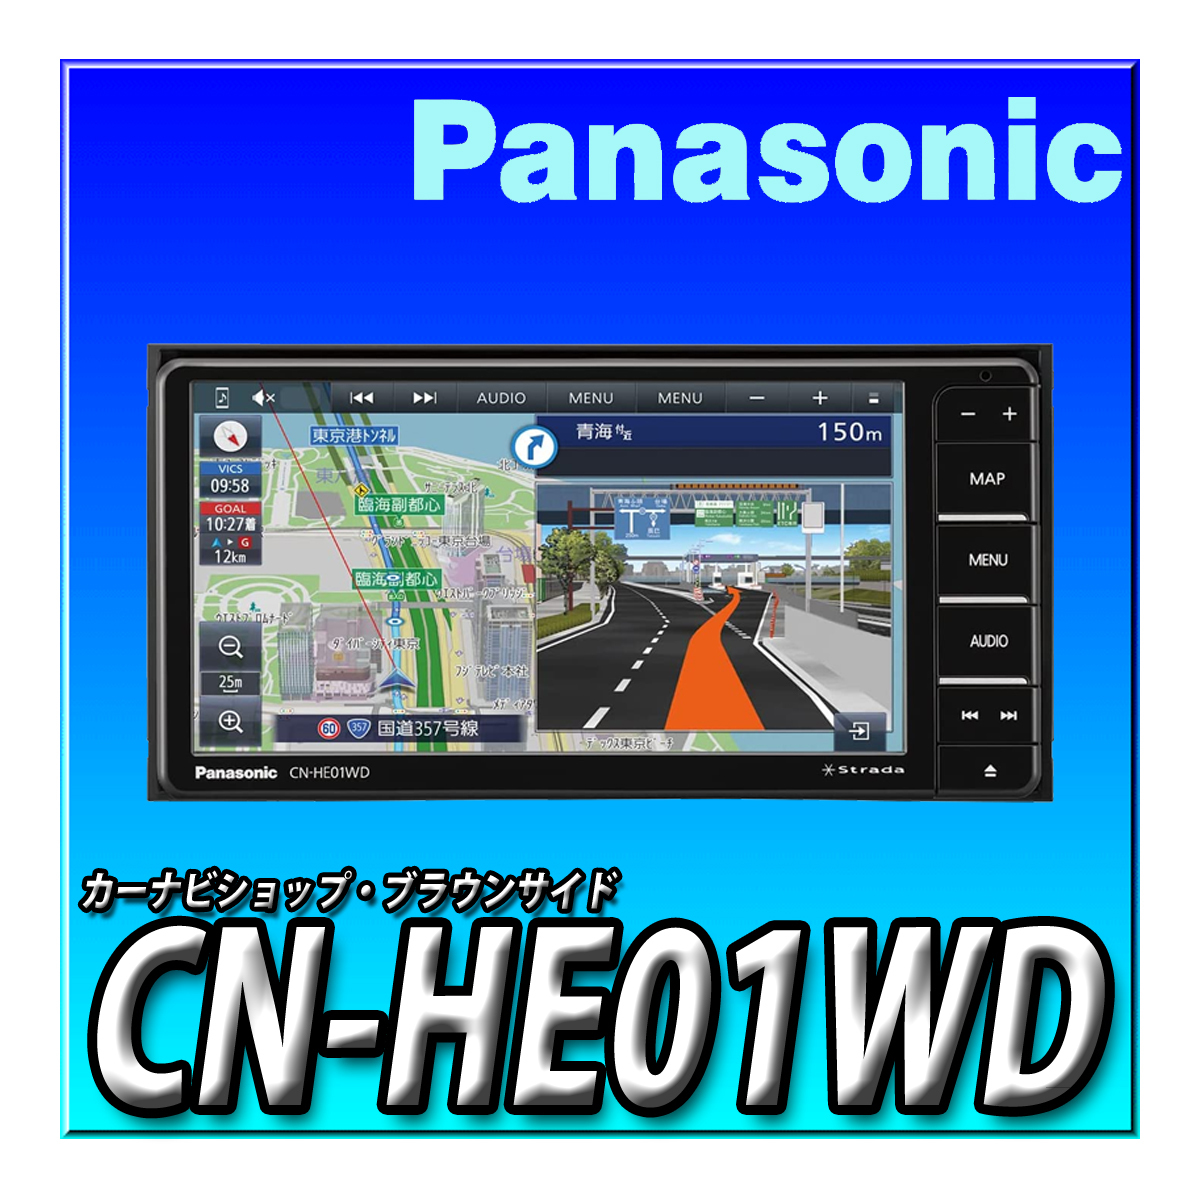 CN-HE01WD 当日出荷 パナソニック ストラーダ 新品 200mmワイド HD液晶